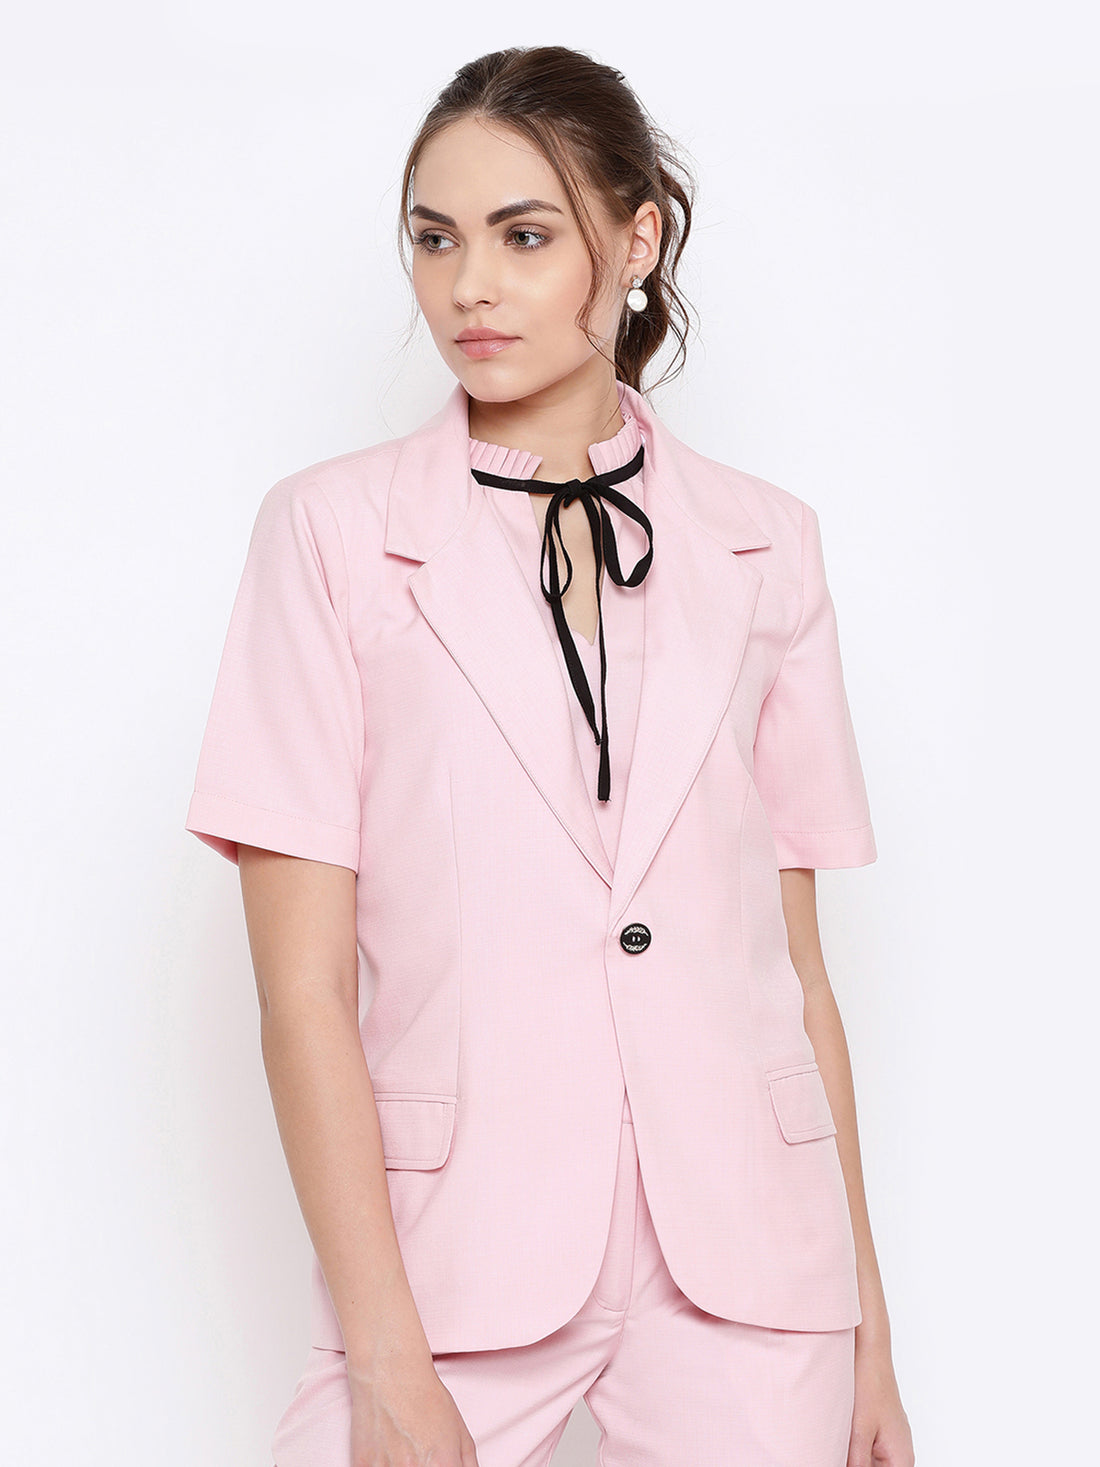 Pink half sleeves blazer